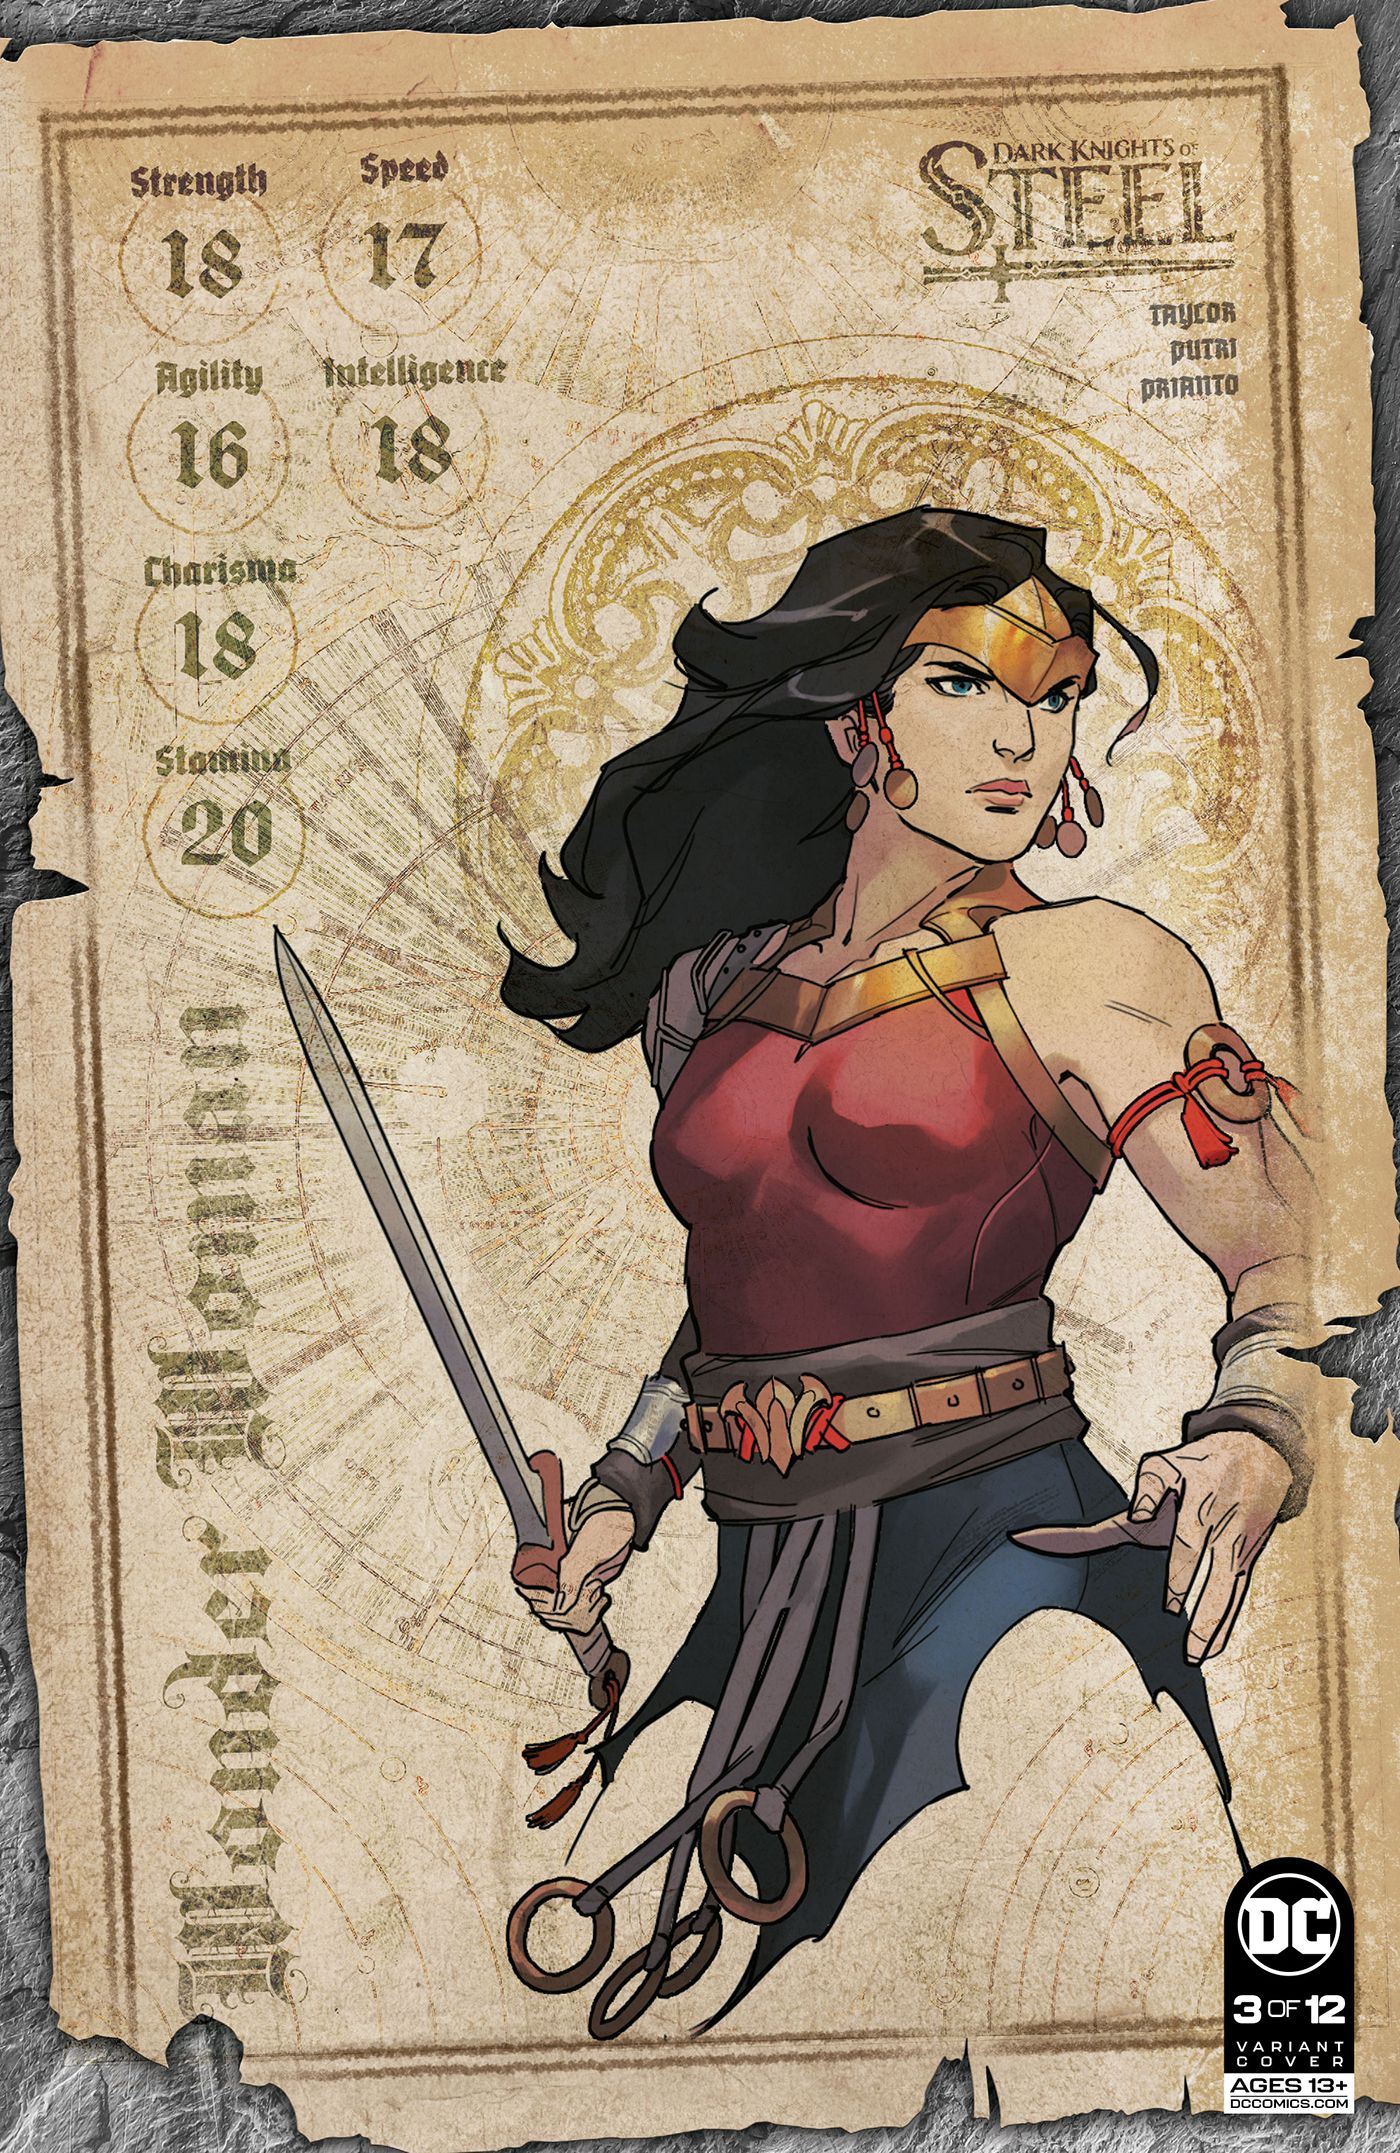 A variant cover for Dark Knights of Steel spotlights Wonder Woman.